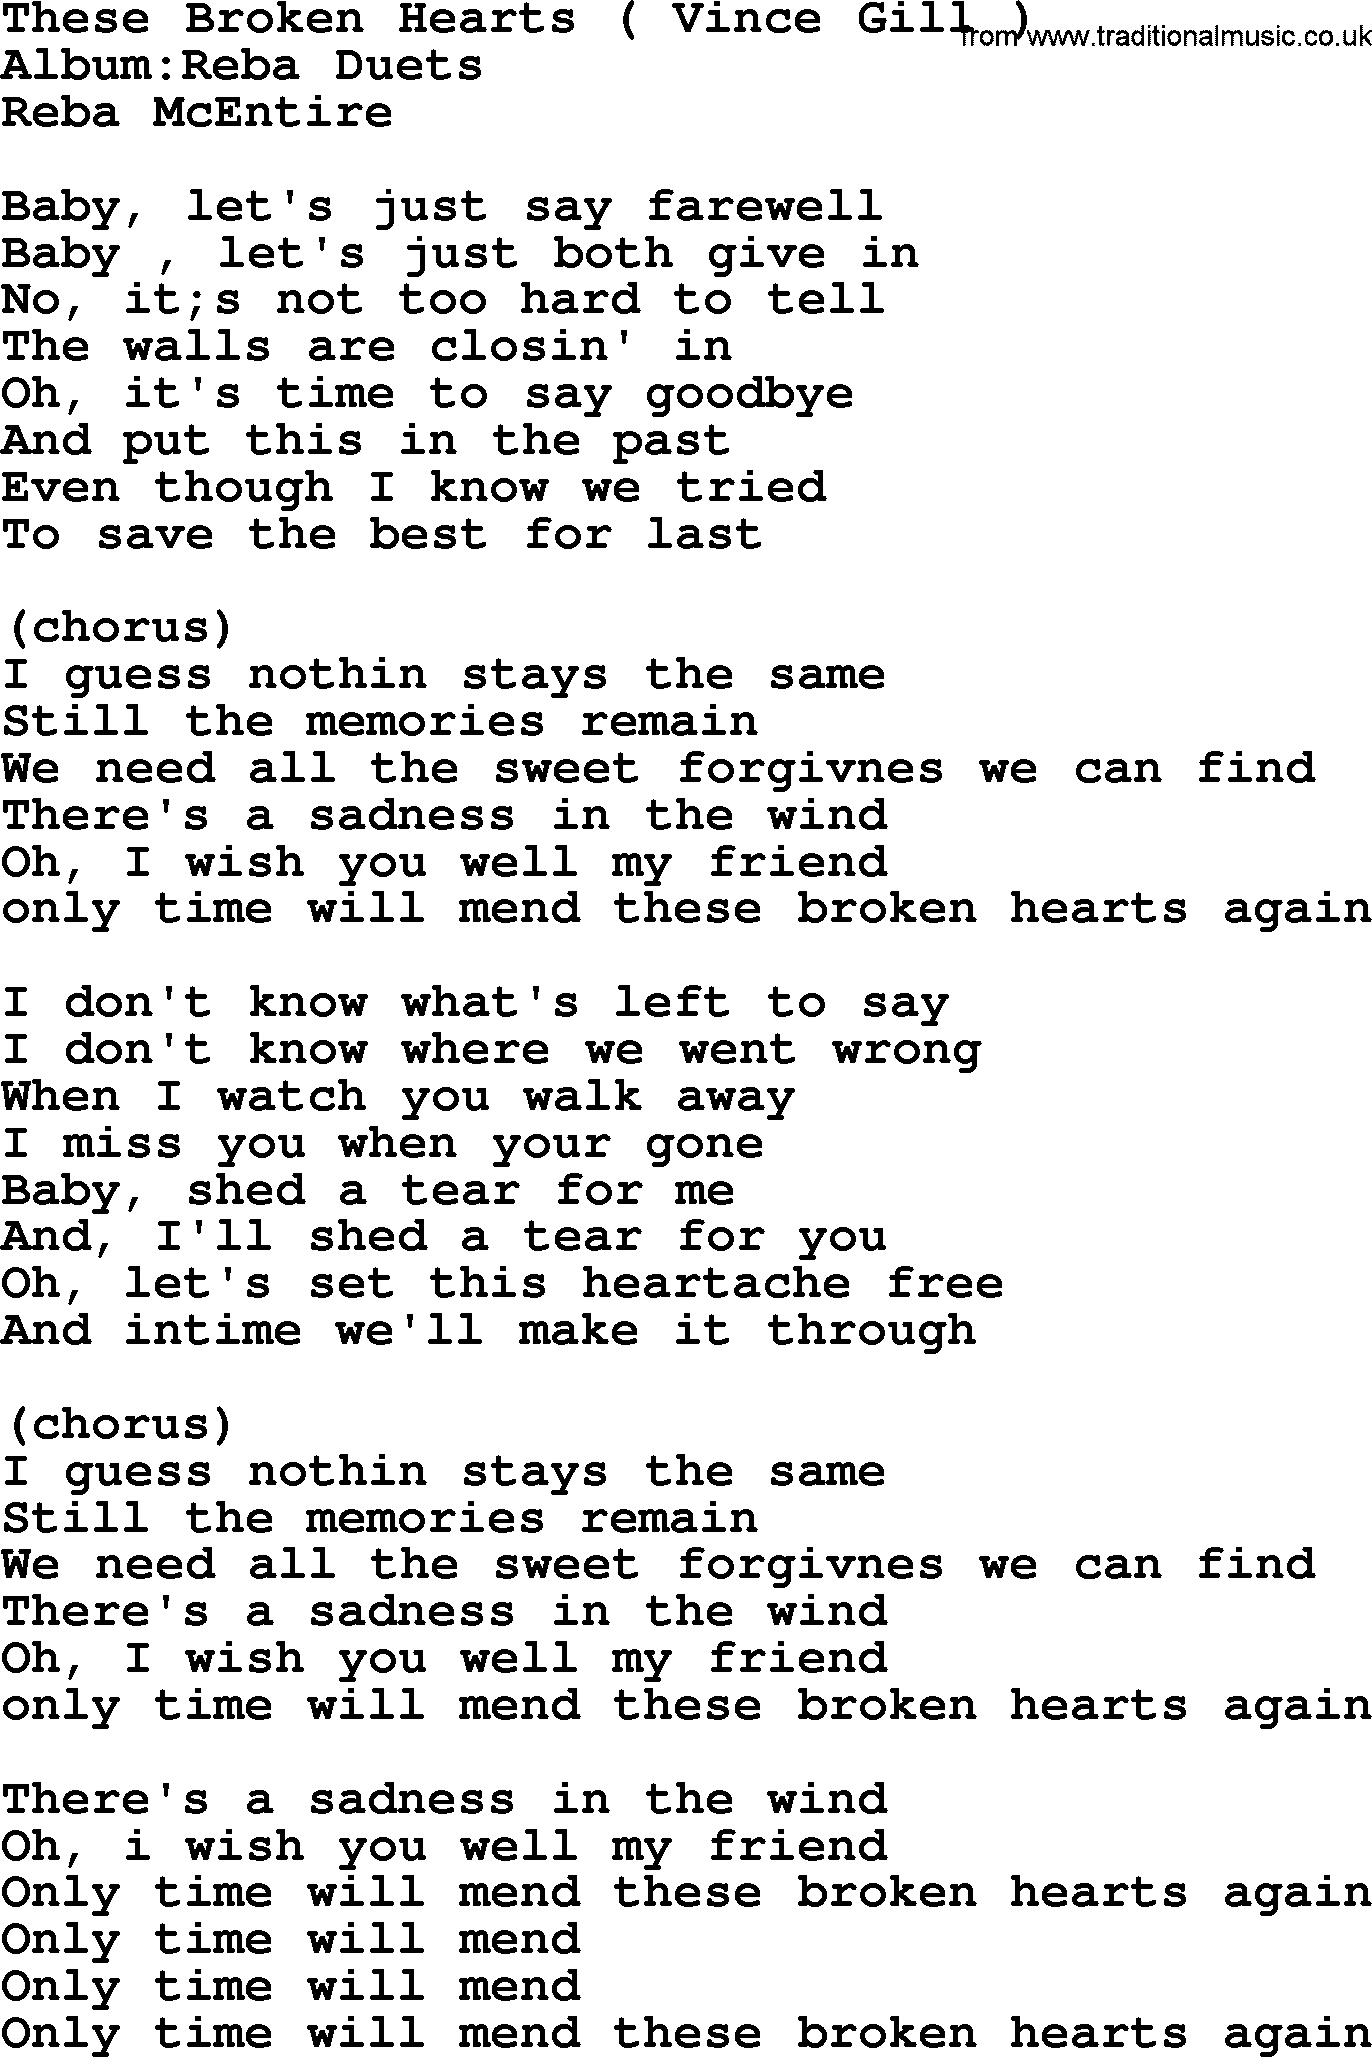 Reba McEntire song: These Broken Hearts lyrics